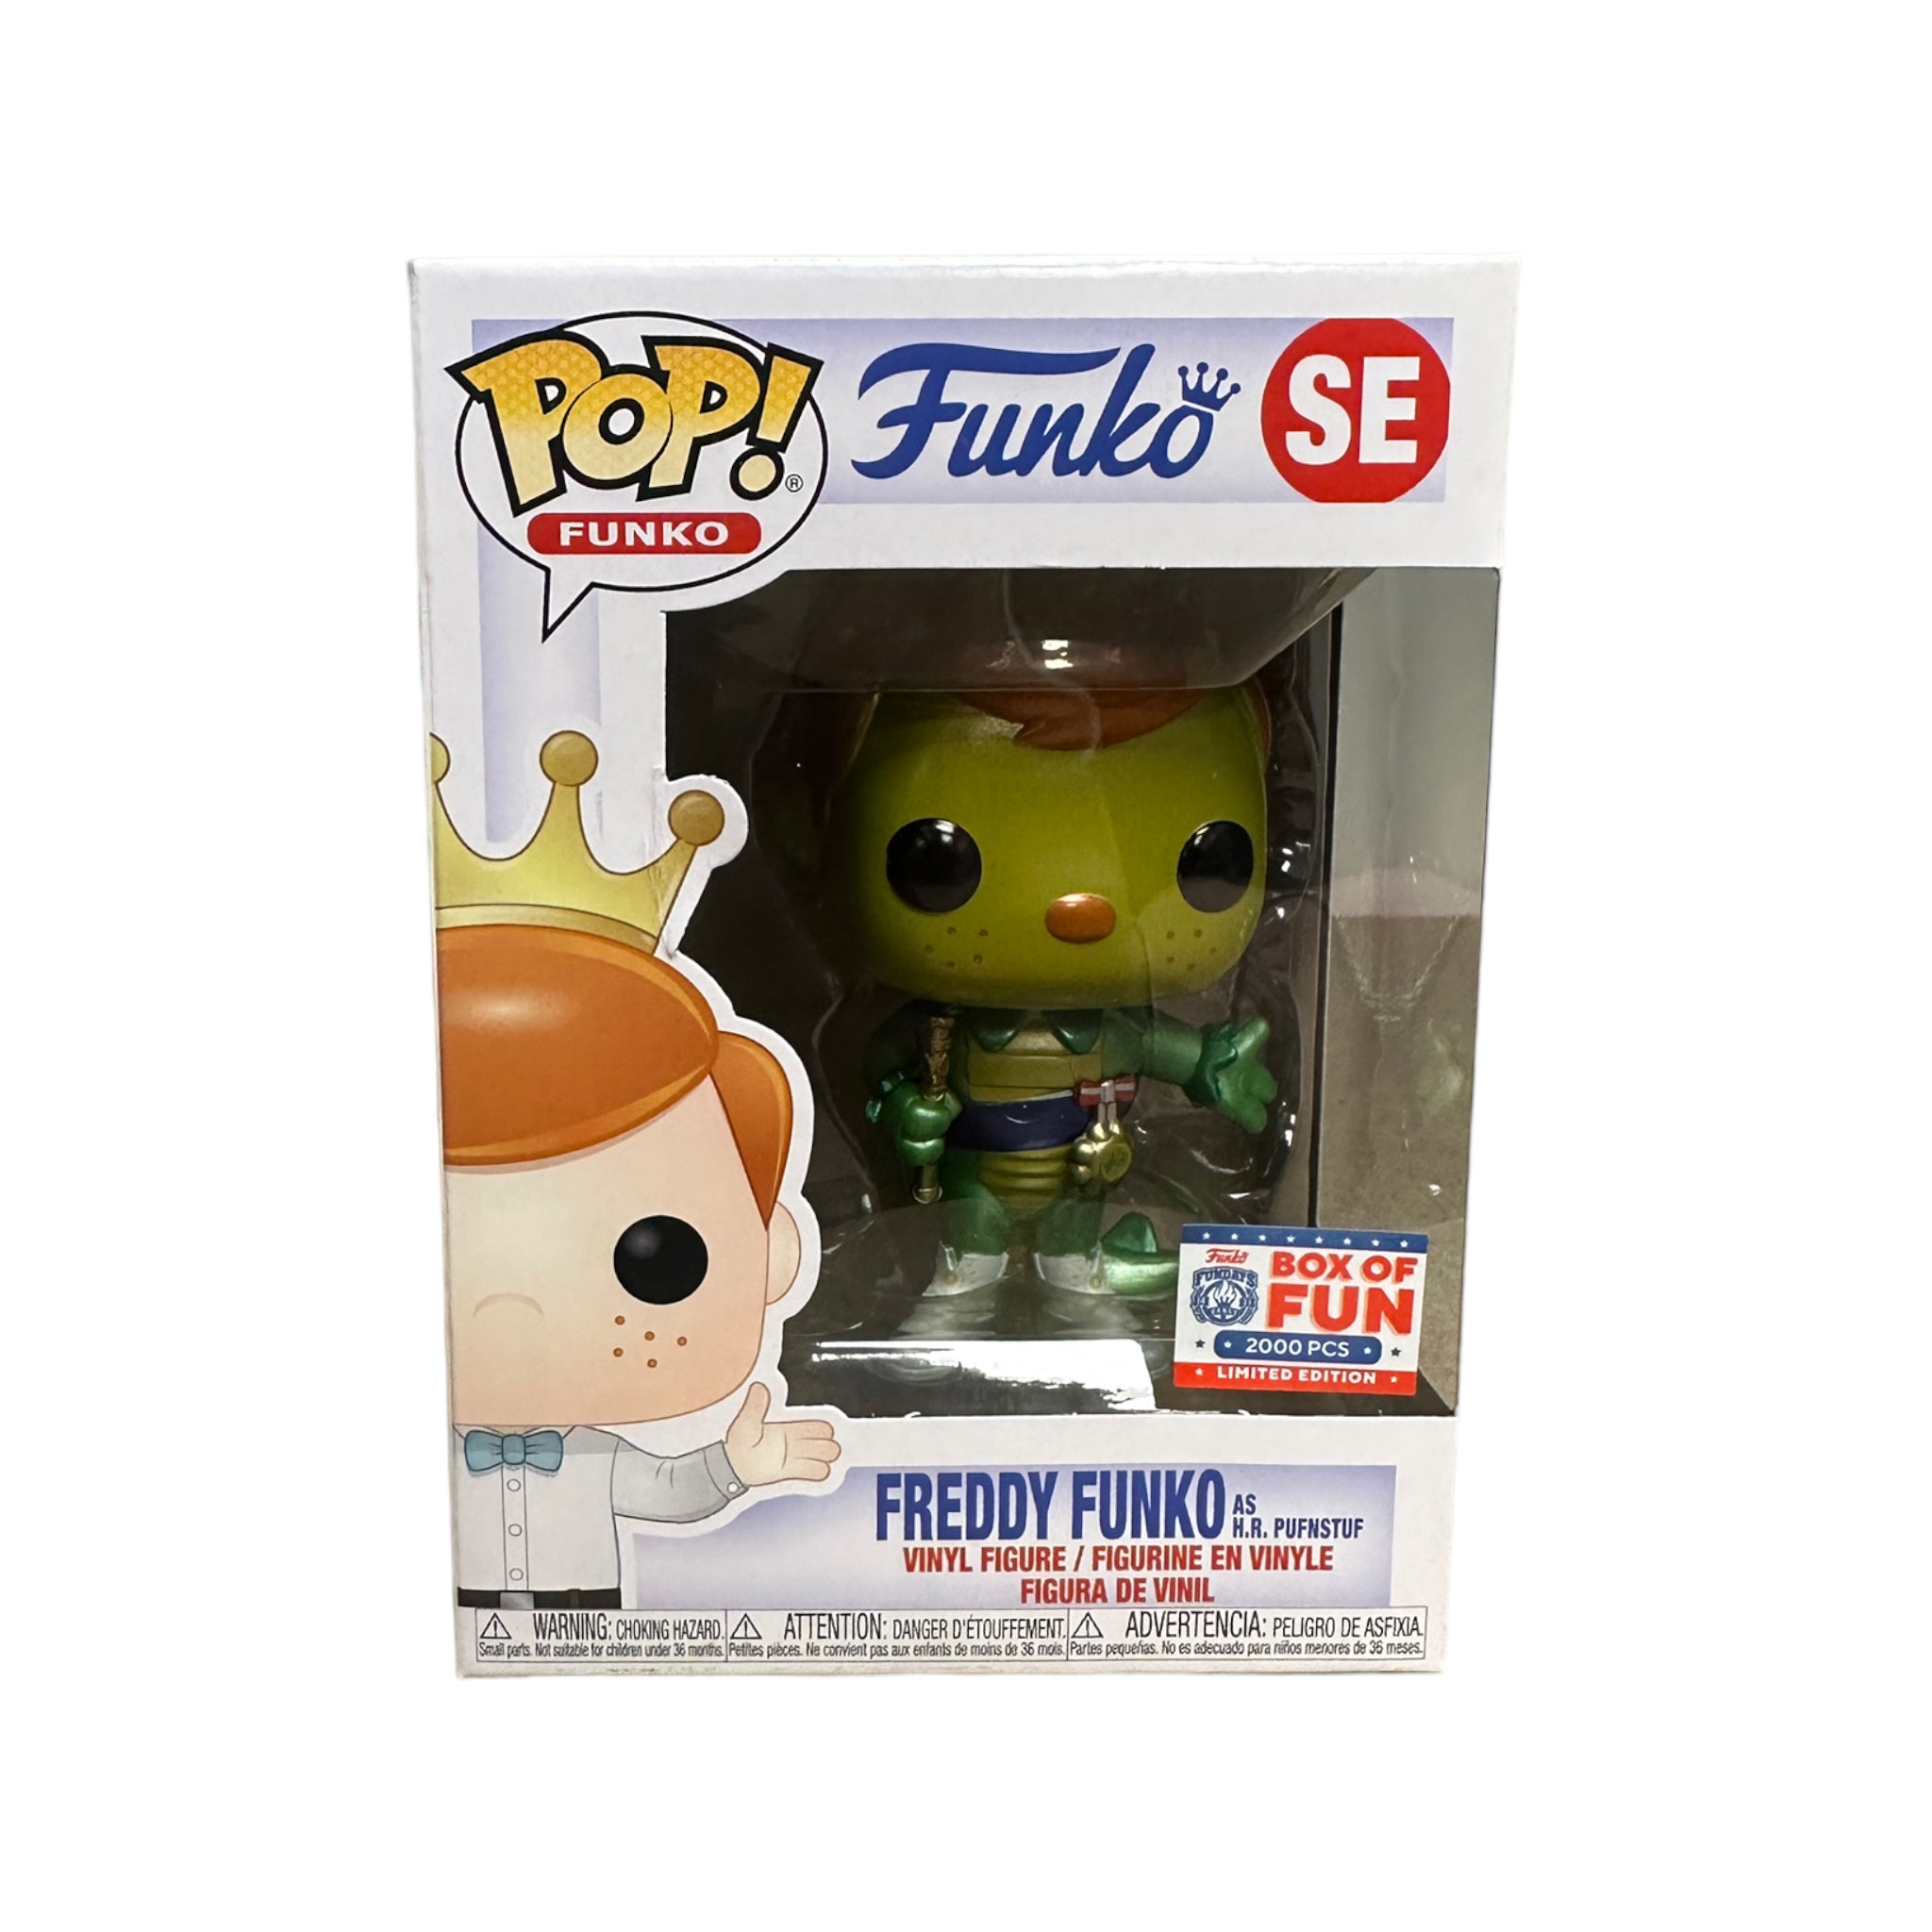 Freddy Funko as H.R. Pufnstuf (Metallic) Funko Pop! - Sid & Marty Krofft Pictures - Virtual Funkon 2021 Box of Fun Exclusive LE2000 Pcs - Condition 8/10